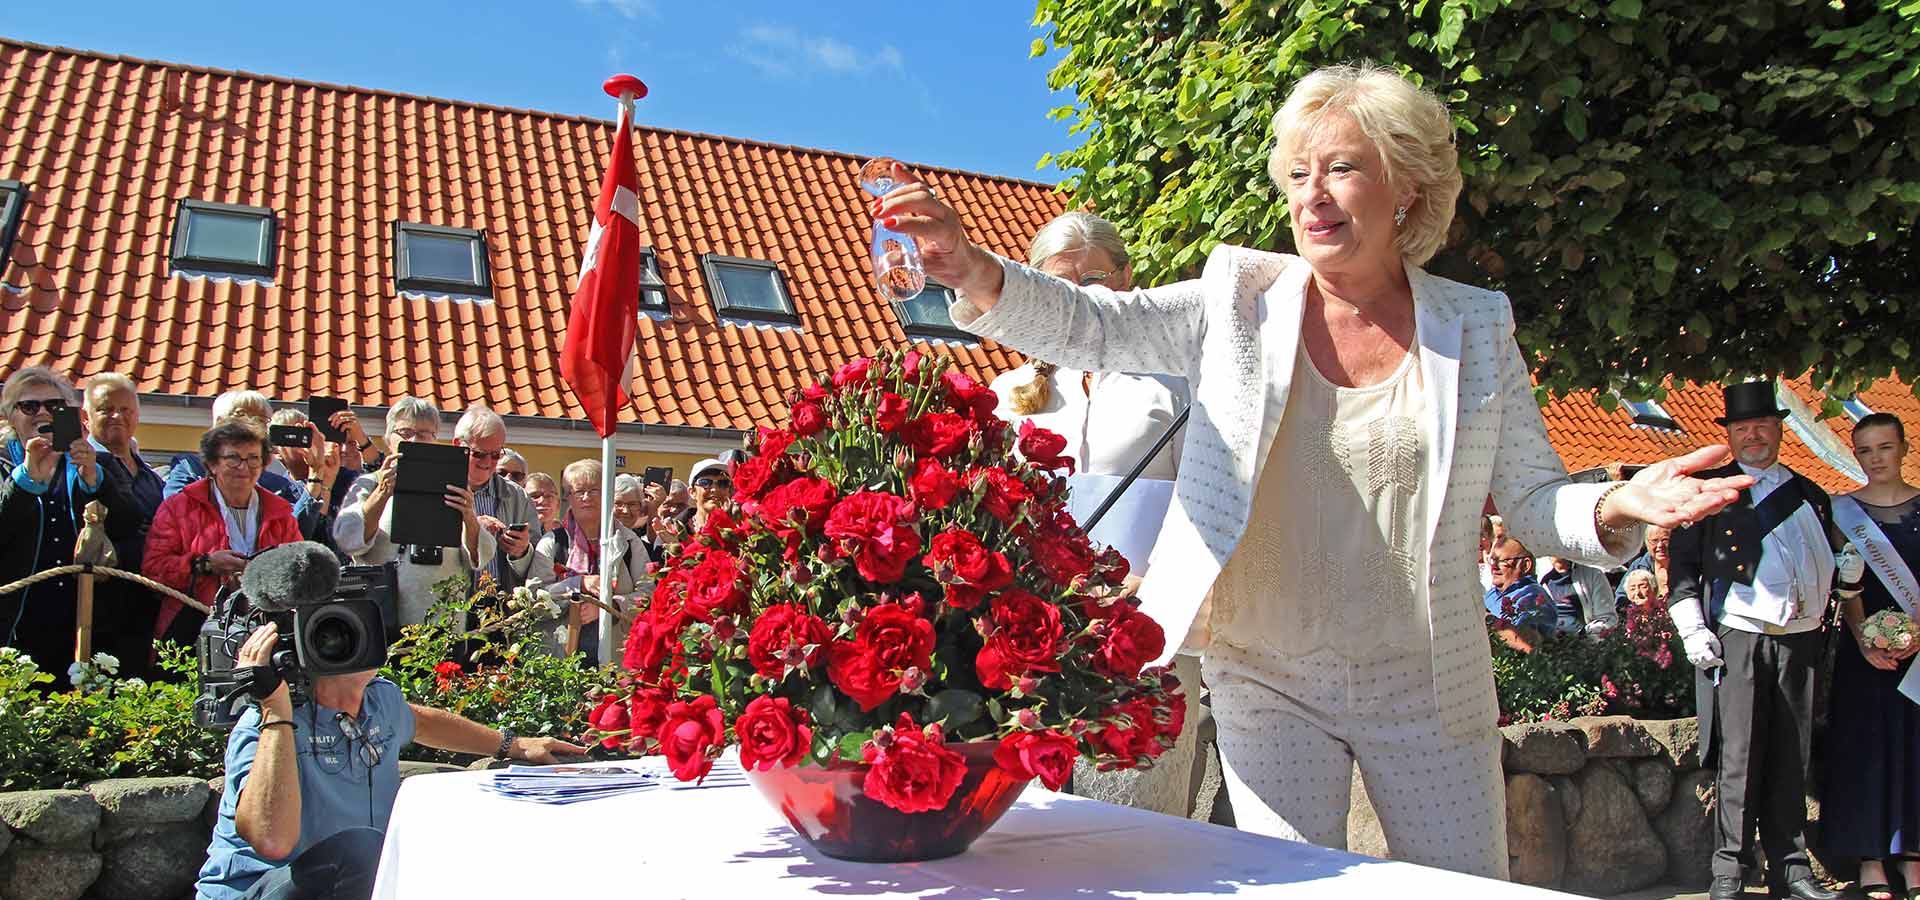 Birthe Kjær døber roserne i champagne til årets Rosenfestival